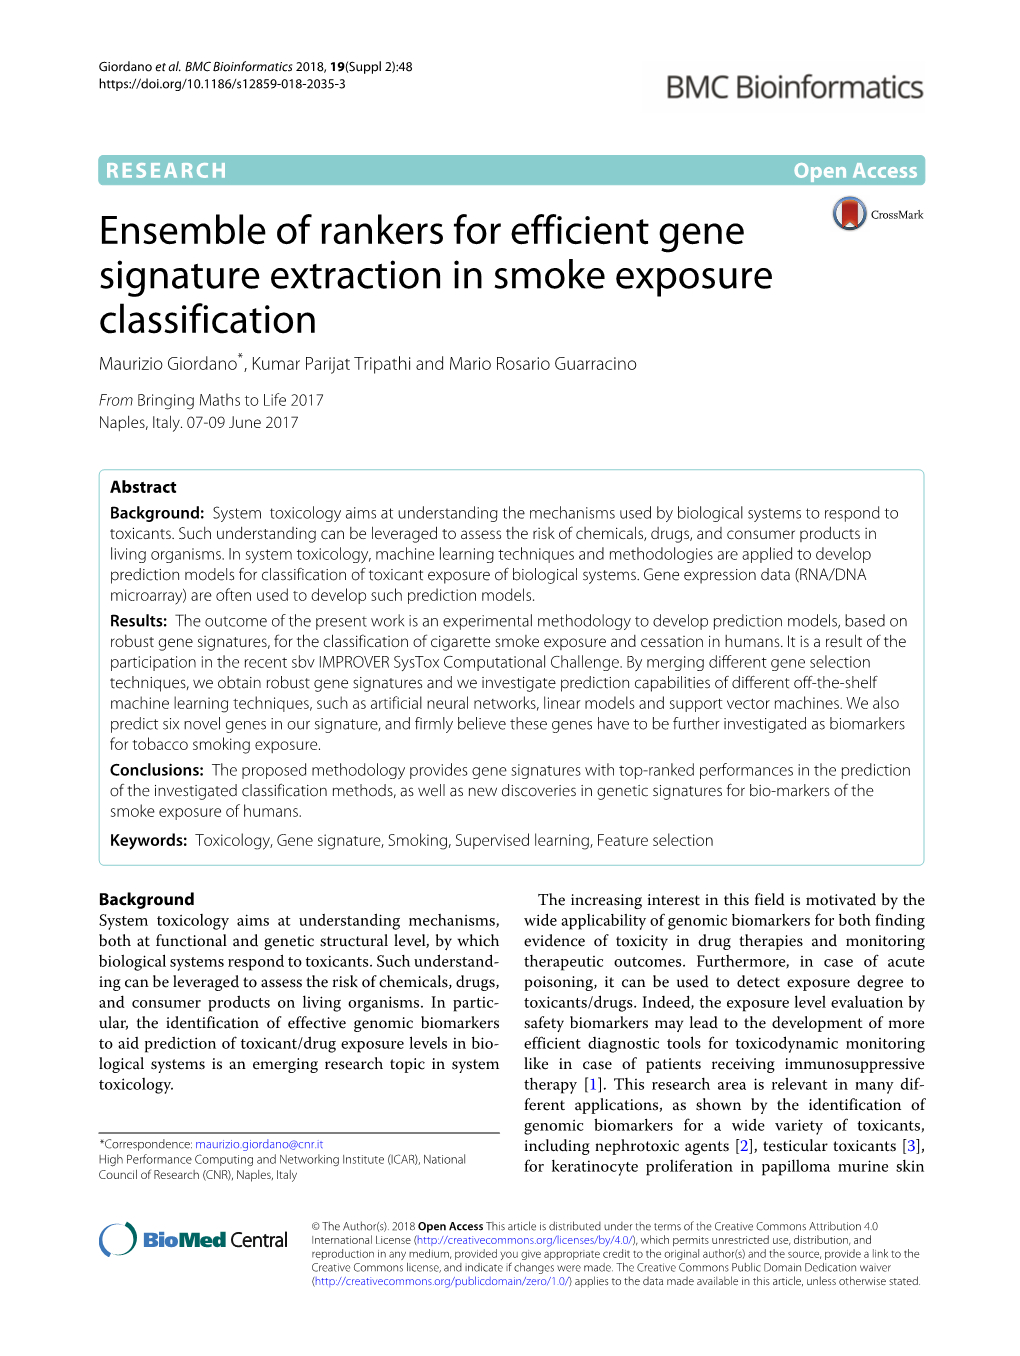 Ensemble of Rankers for Efficient Gene Signature Extraction in Smoke Exposure Classification Maurizio Giordano*, Kumar Parijat Tripathi and Mario Rosario Guarracino